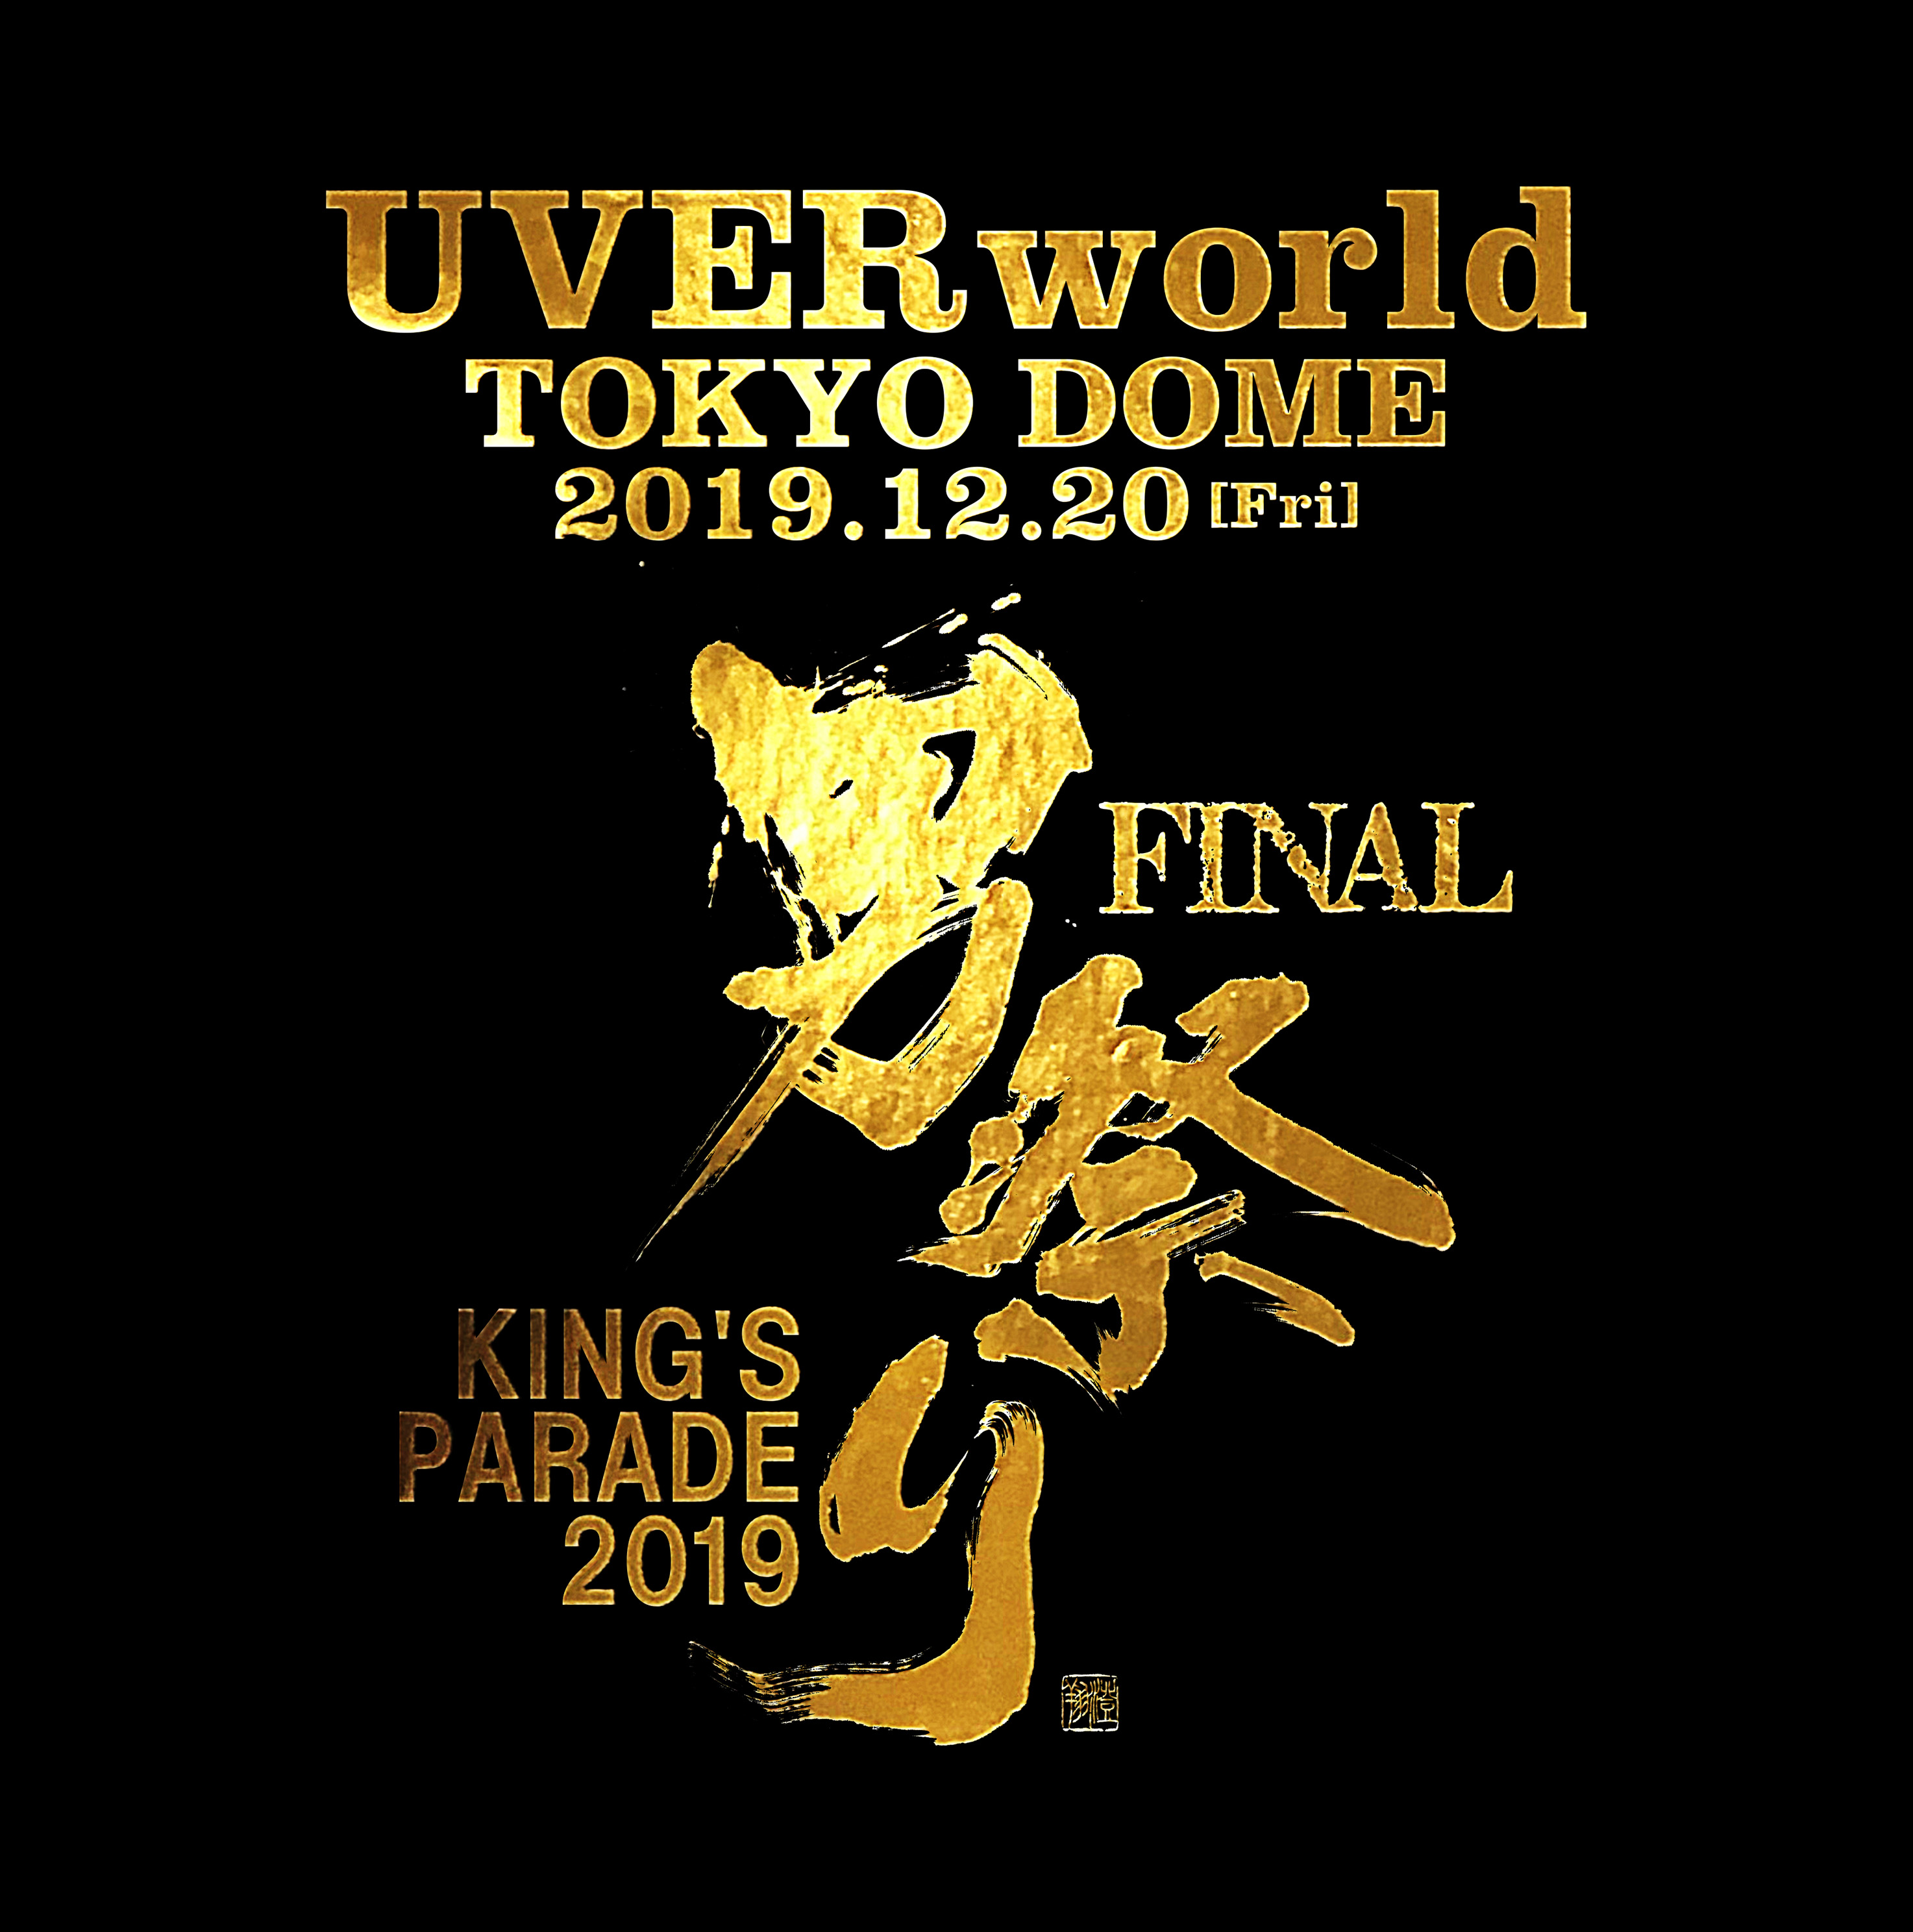 UVERworld KING'S PARADE Nippon Budokan